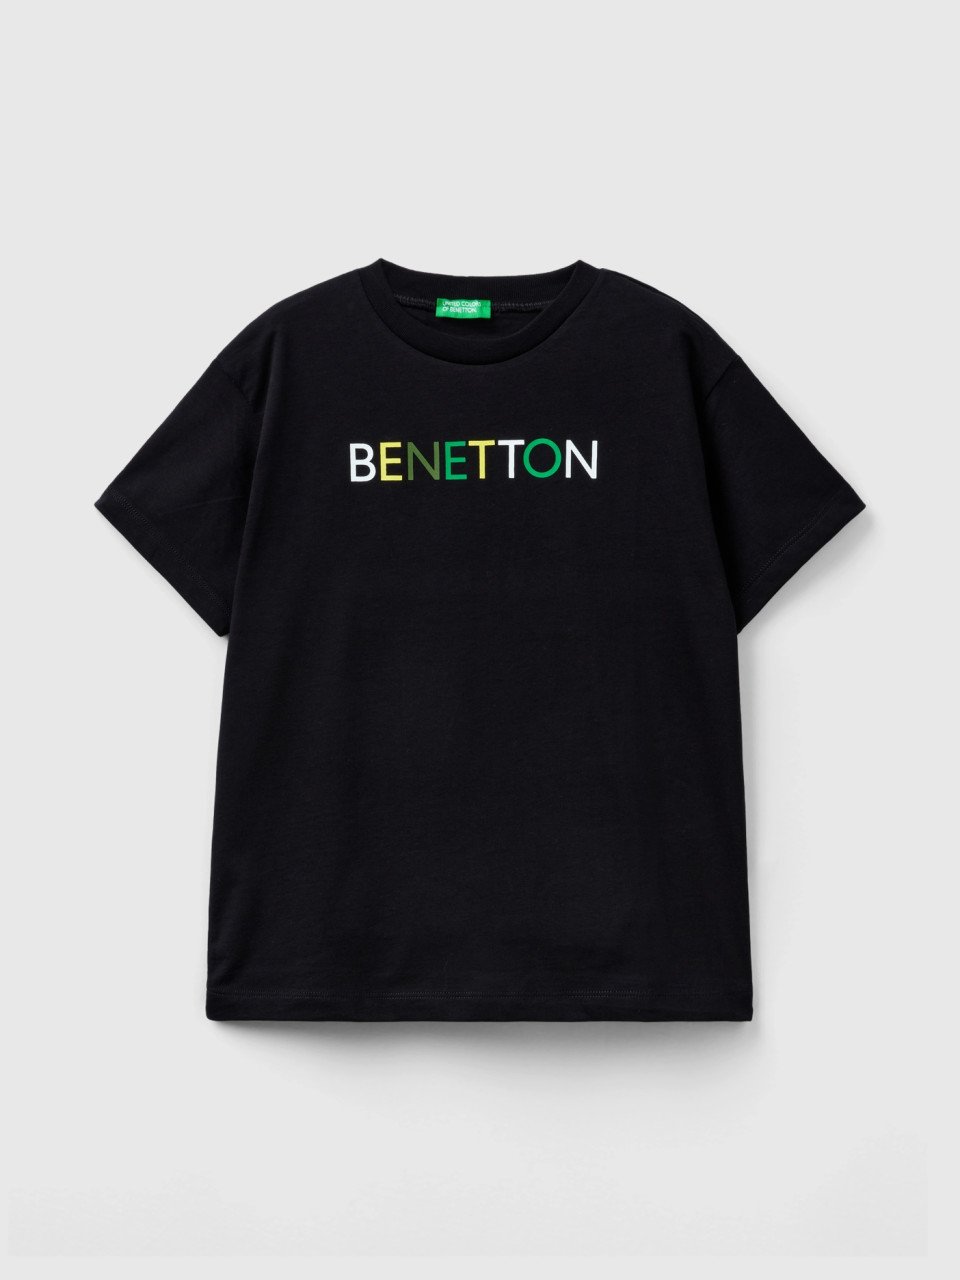 Benetton, 100% Organic Cotton T-shirt, Black, Kids